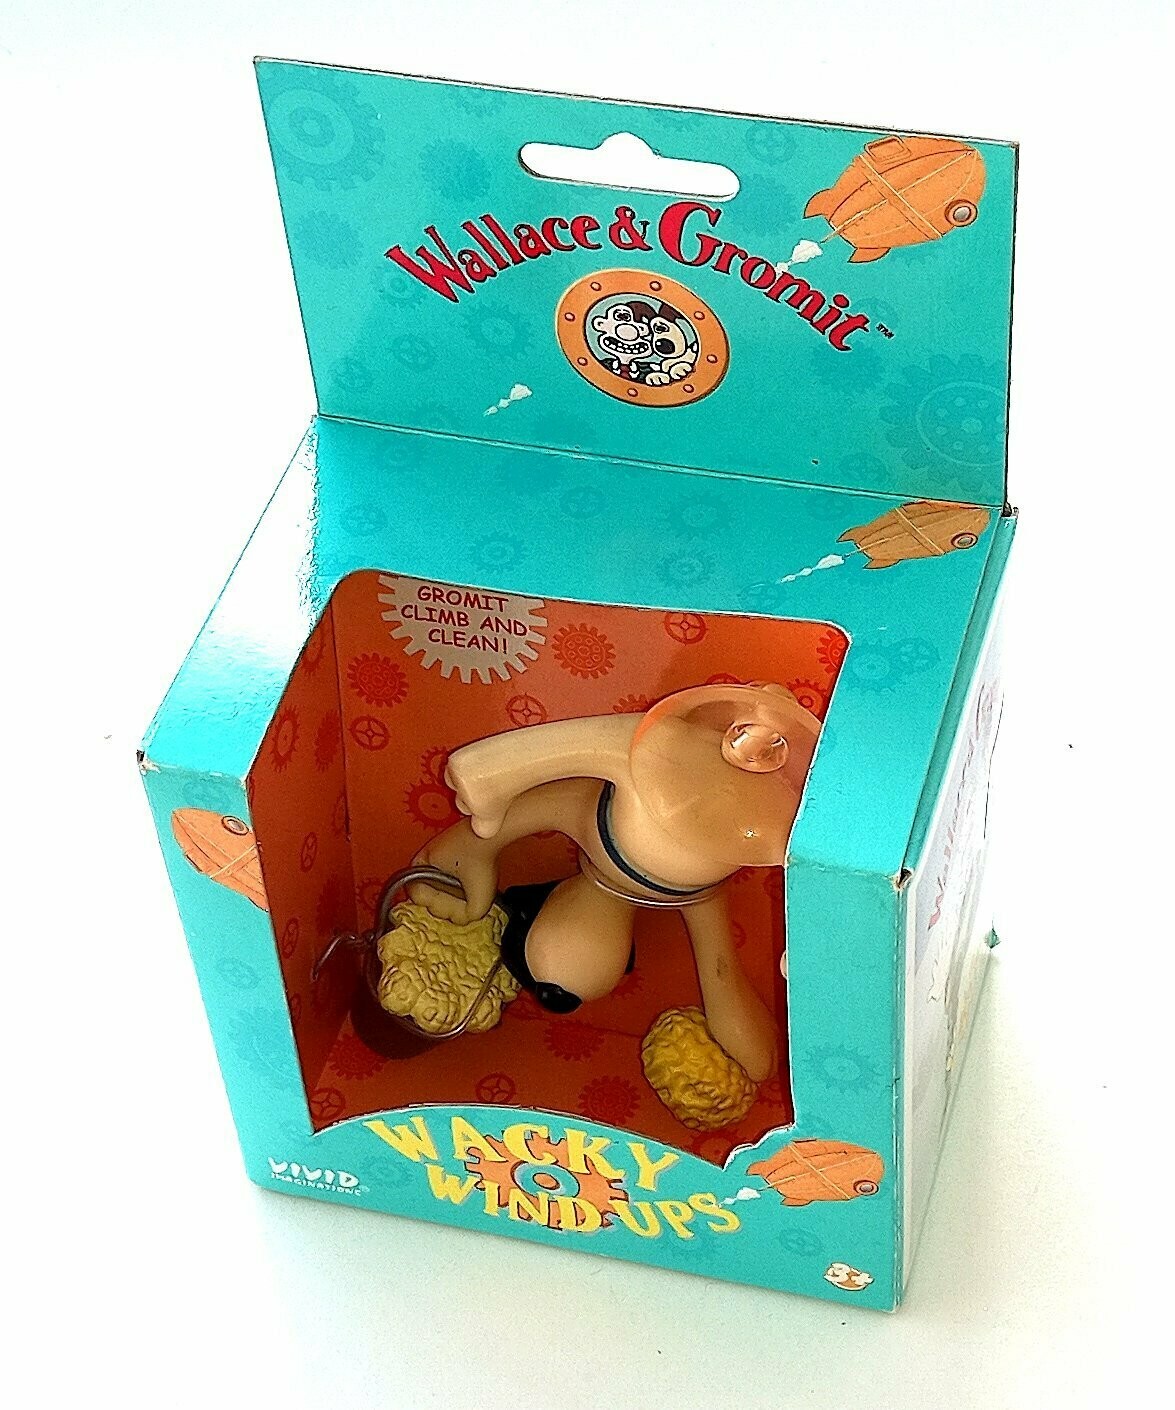 1989 Vivid ~ Wallace & Gromit Ltd ~ Wacky Wind-ups ~ GROMIT WINDOW CLEANER